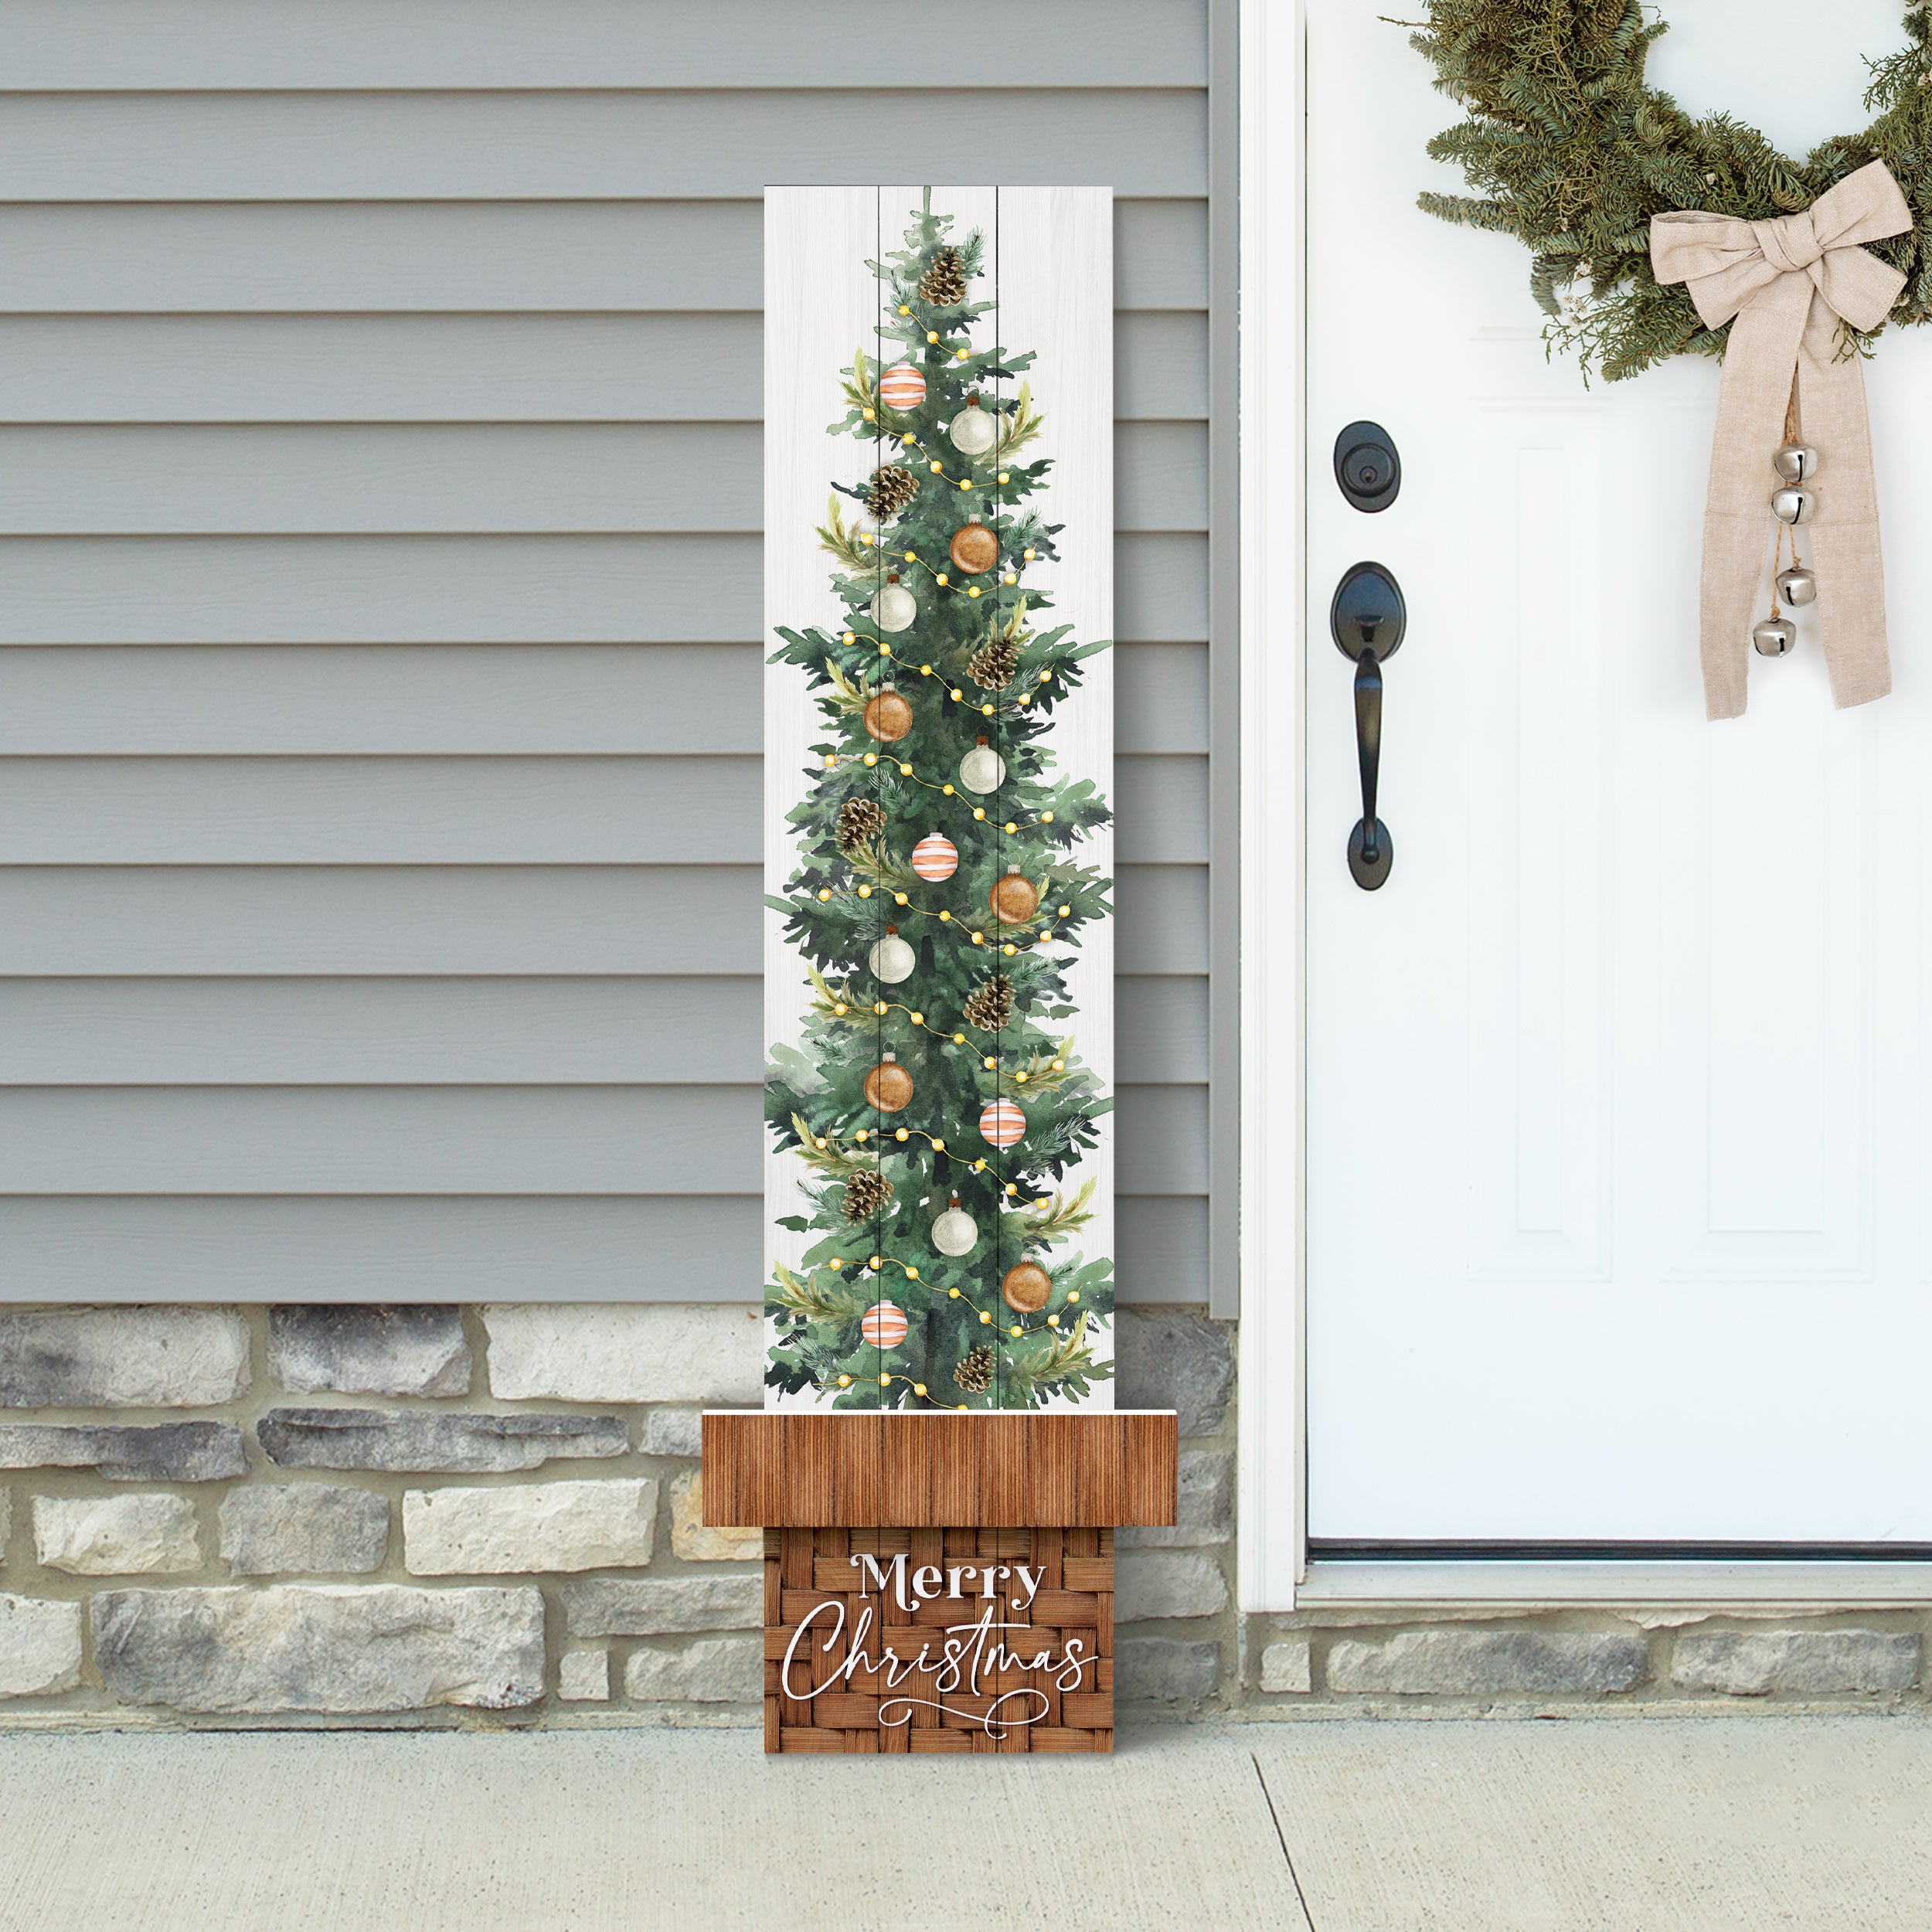 Merry Christmas Outdoor Porch Sign